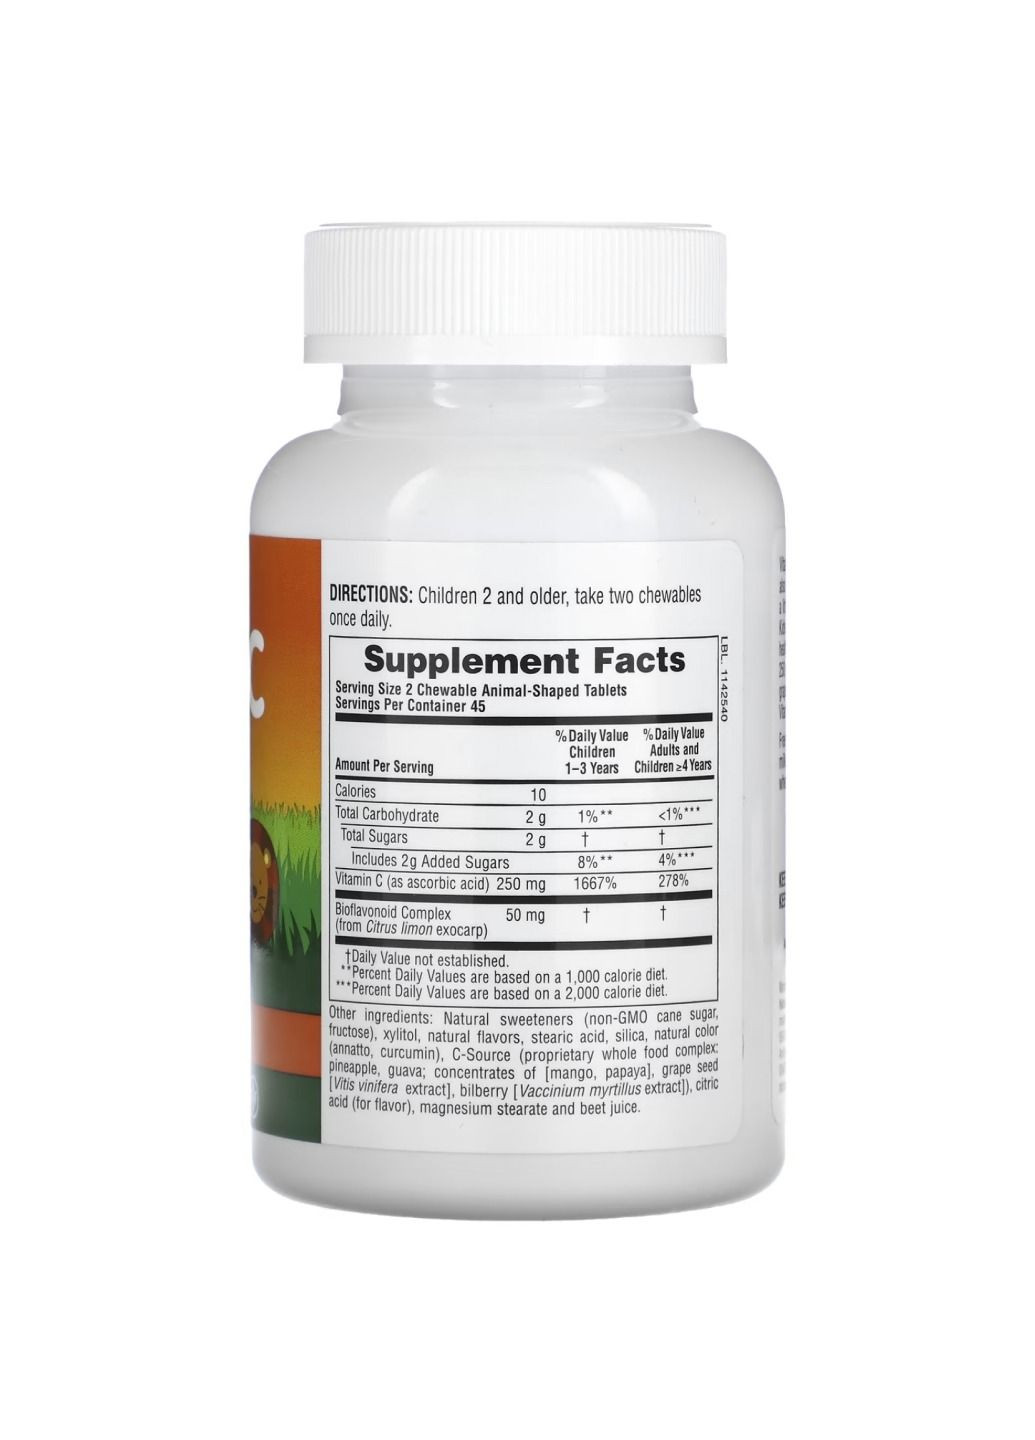 Комплекс витаминов Vit C Chewable - 90 tabs Nature's Plus (280917101)